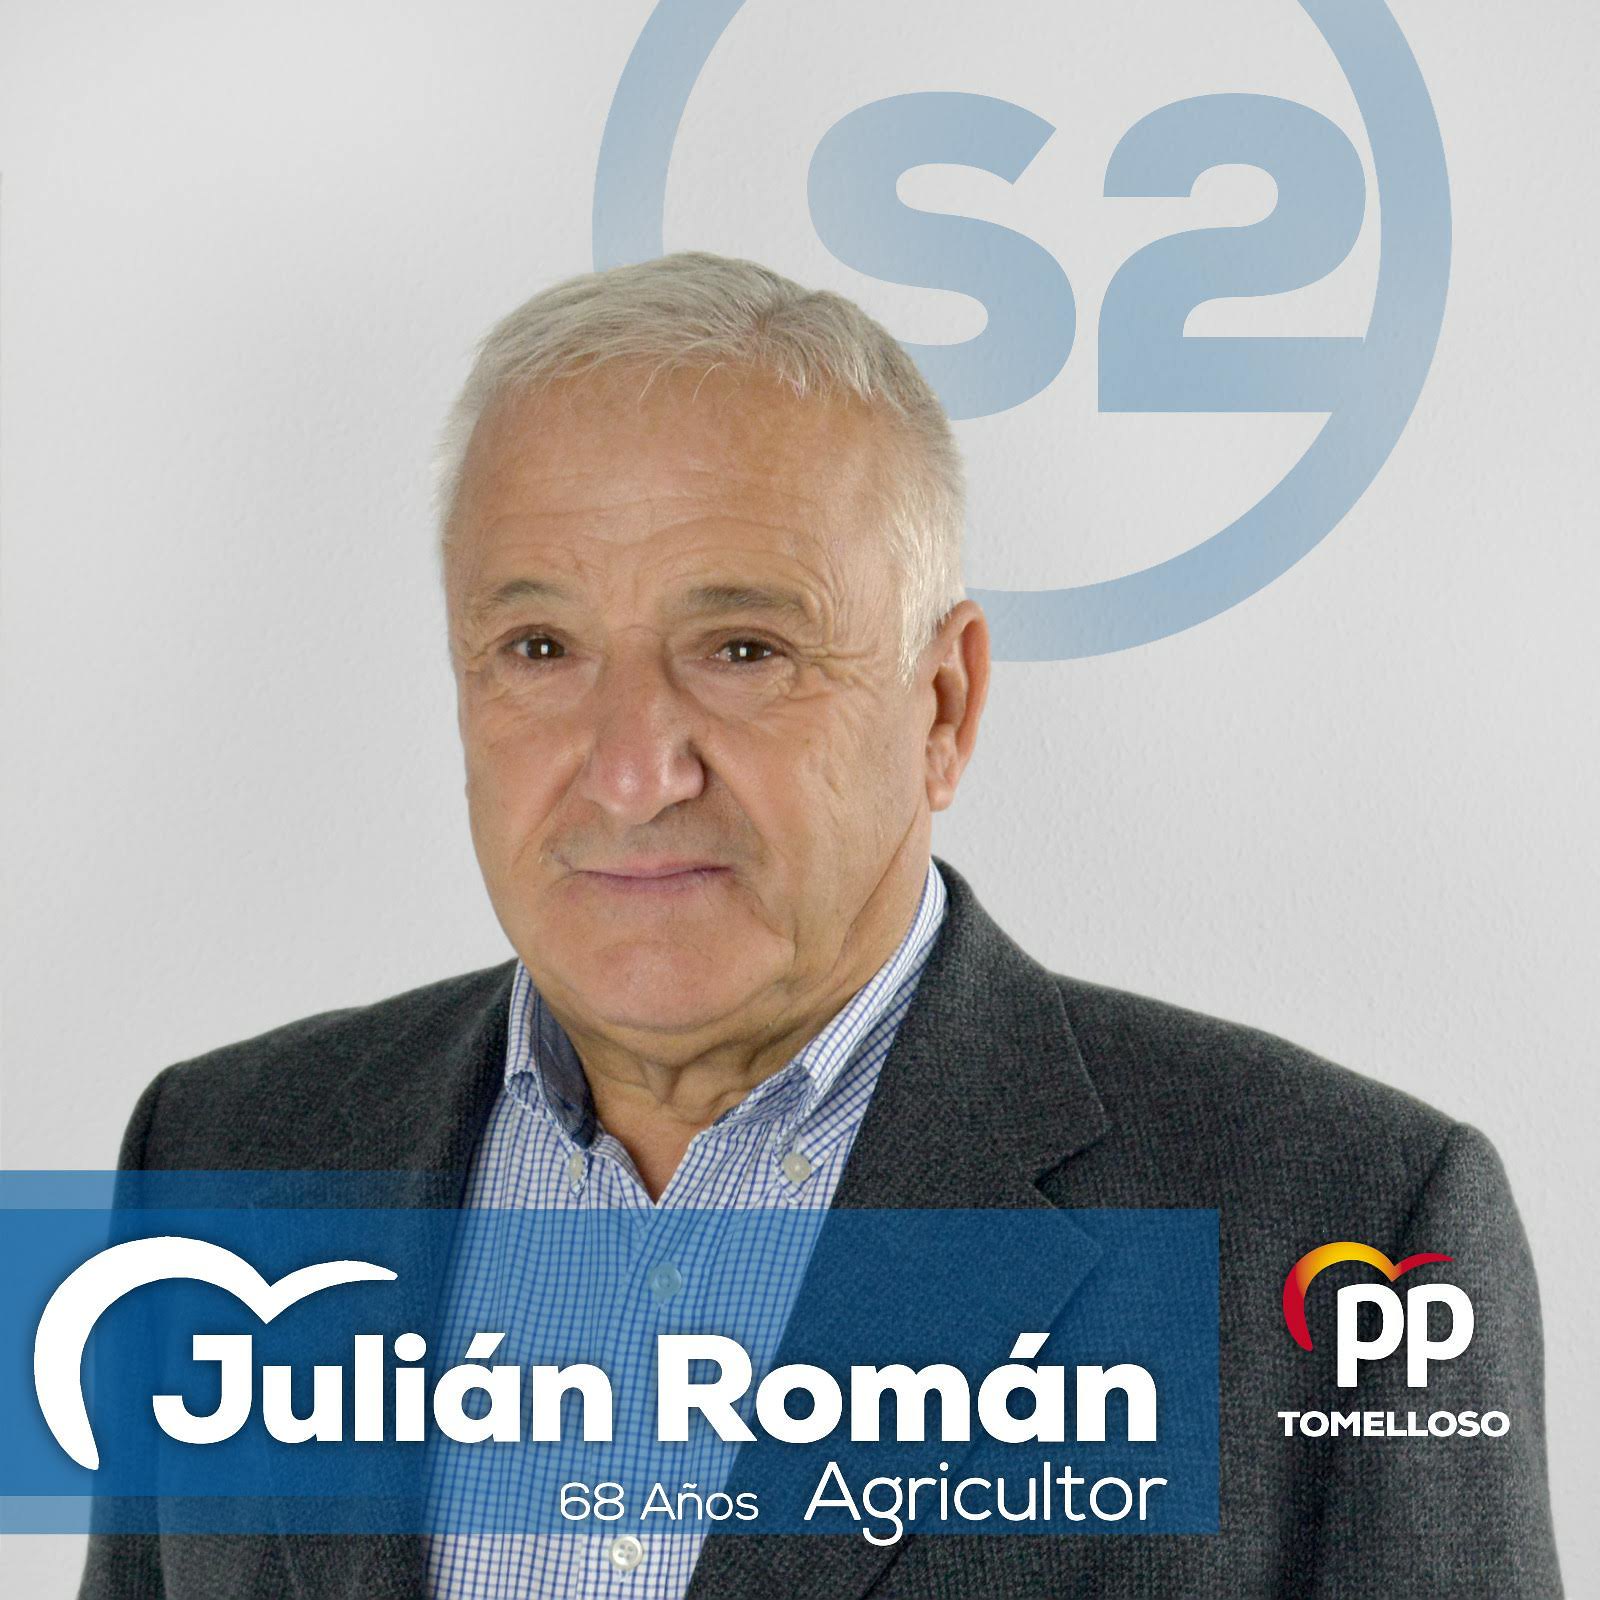 julian-roman-pp-tomelloso